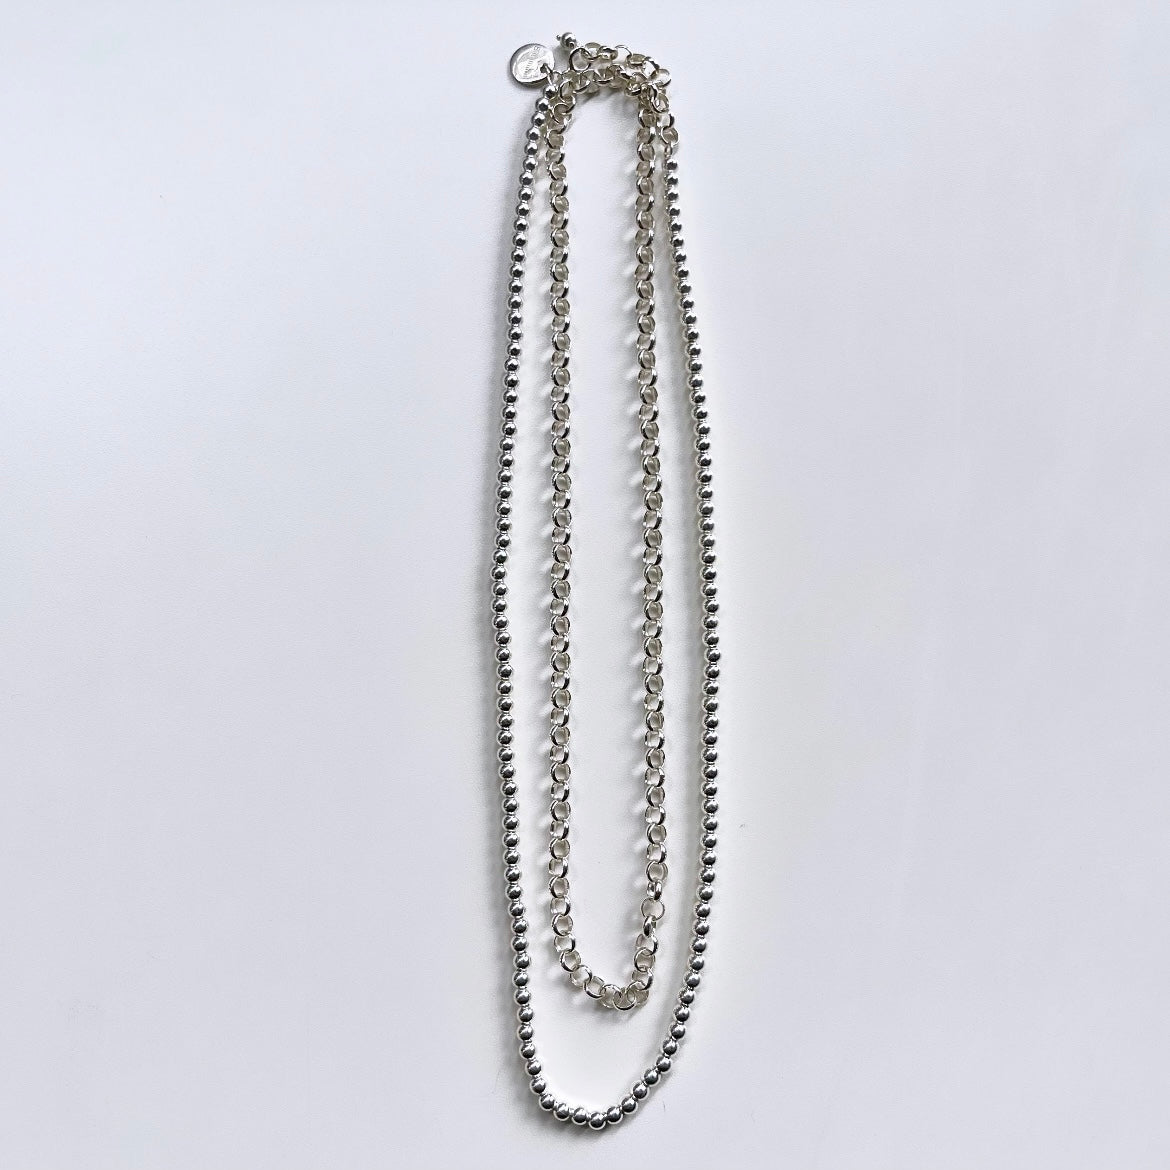 【横浜店限定】Silver92 Chain necklace